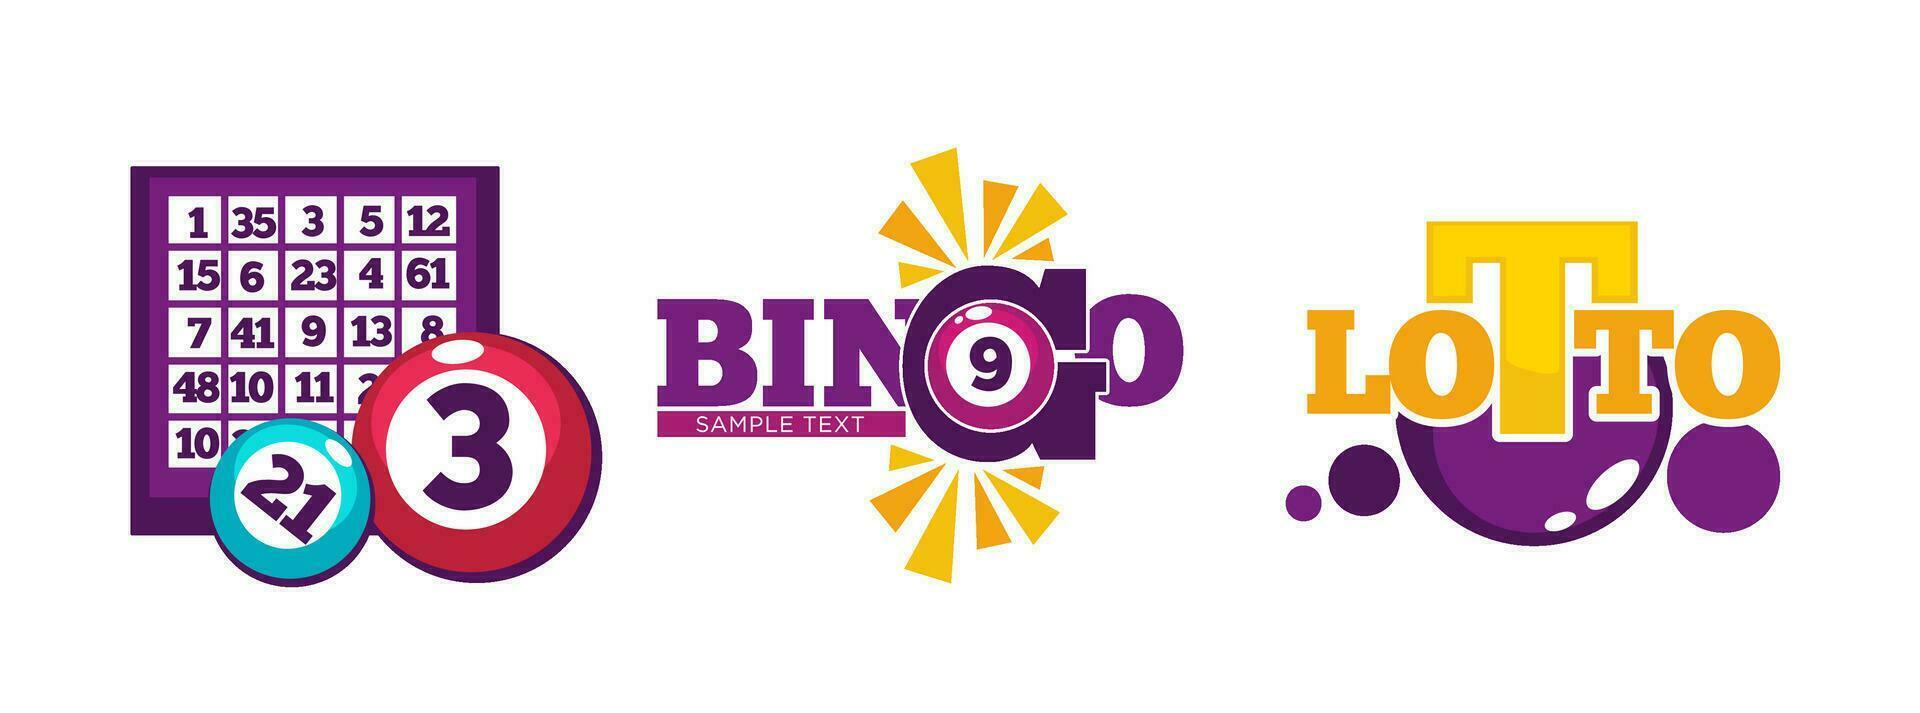 Bingo and lotto, gambling and playing games vector